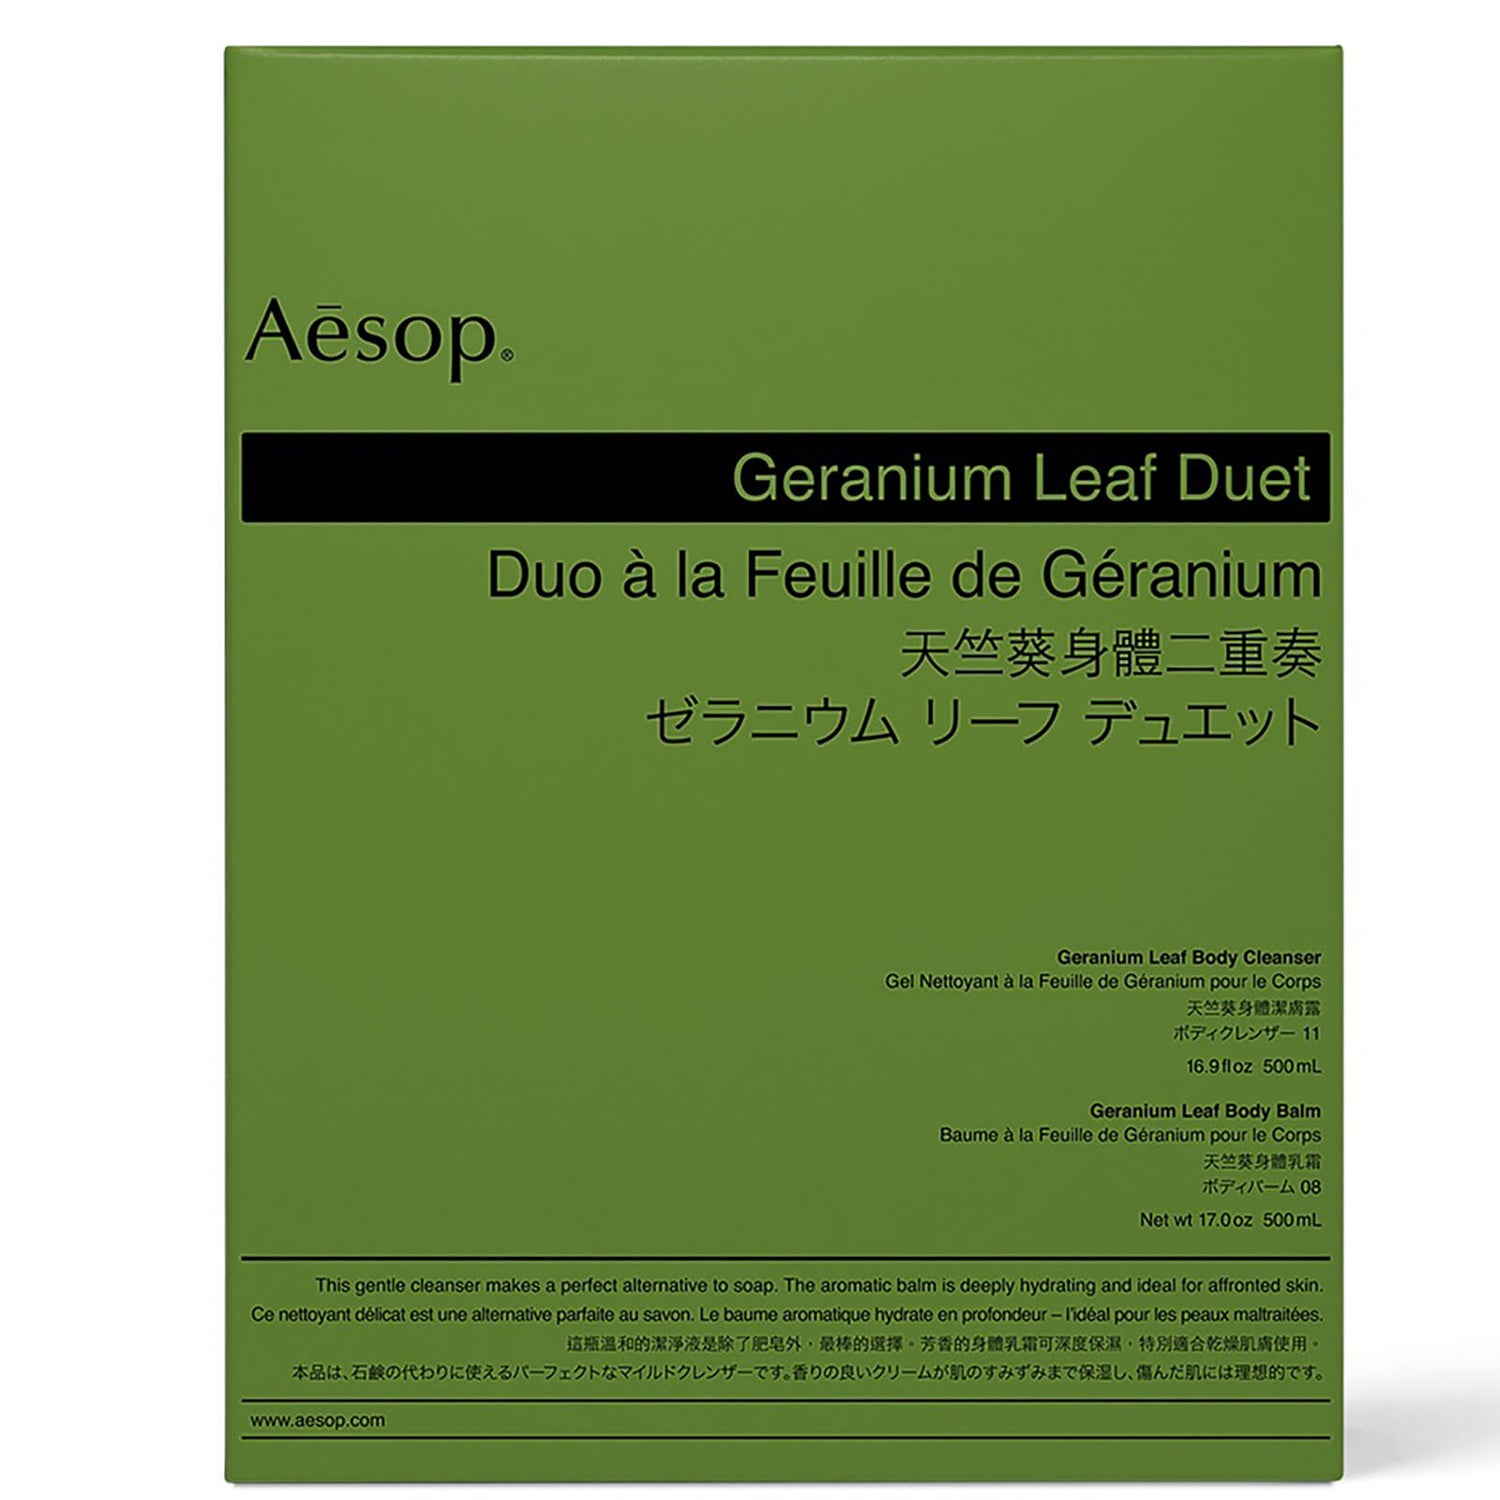 Aesop Geranium Leaf Body Cleanser and Balm Duet | SkinStore